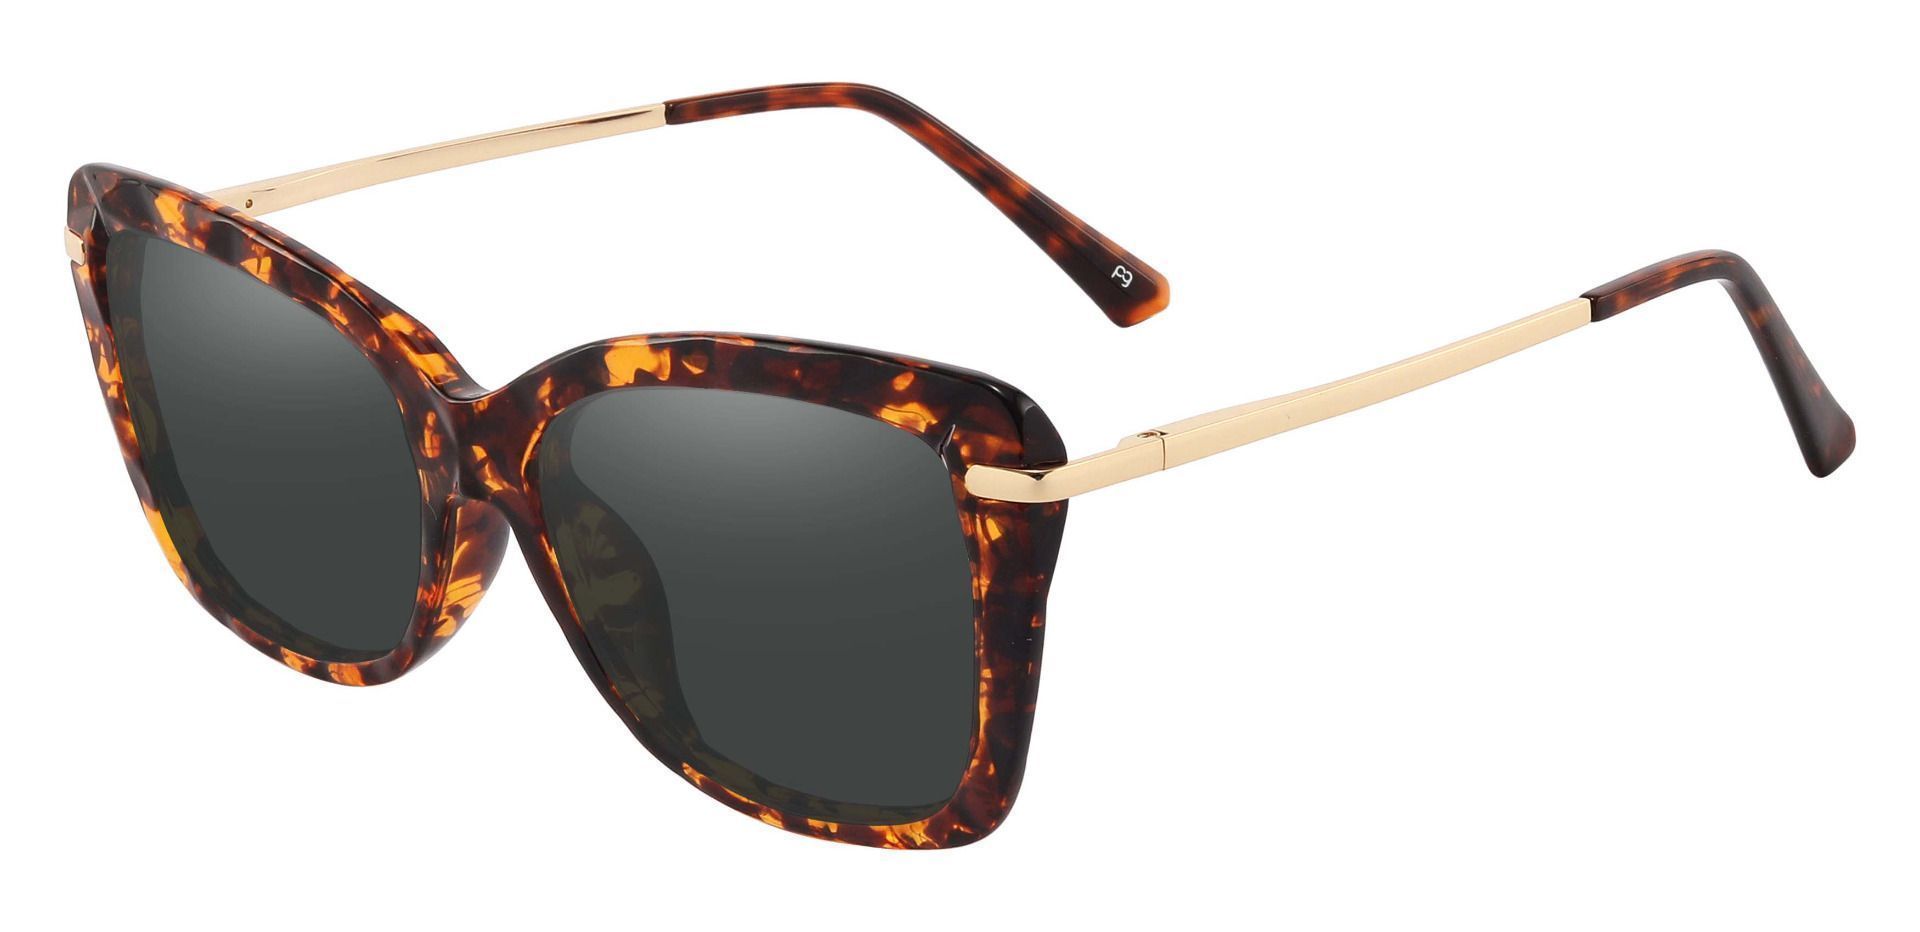 Shoshanna Rectangle Lined Bifocal Sunglasses - Tortoise Frame With Gray Lenses